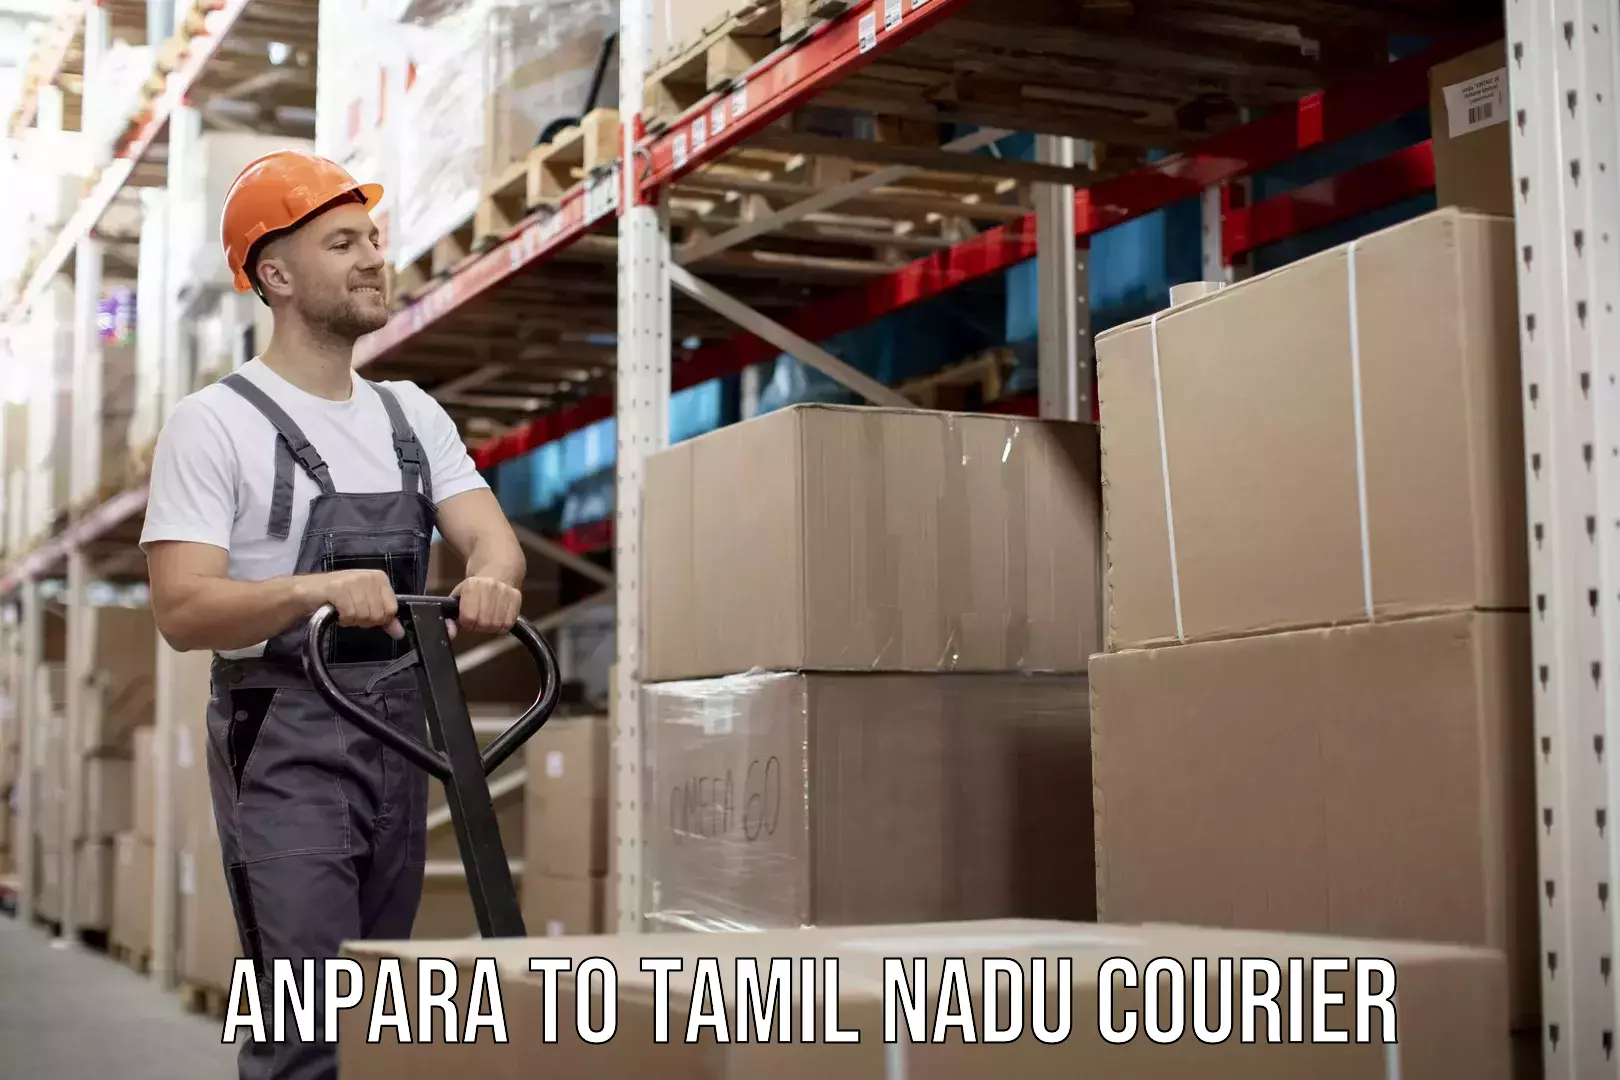 International courier networks Anpara to Tamil Nadu